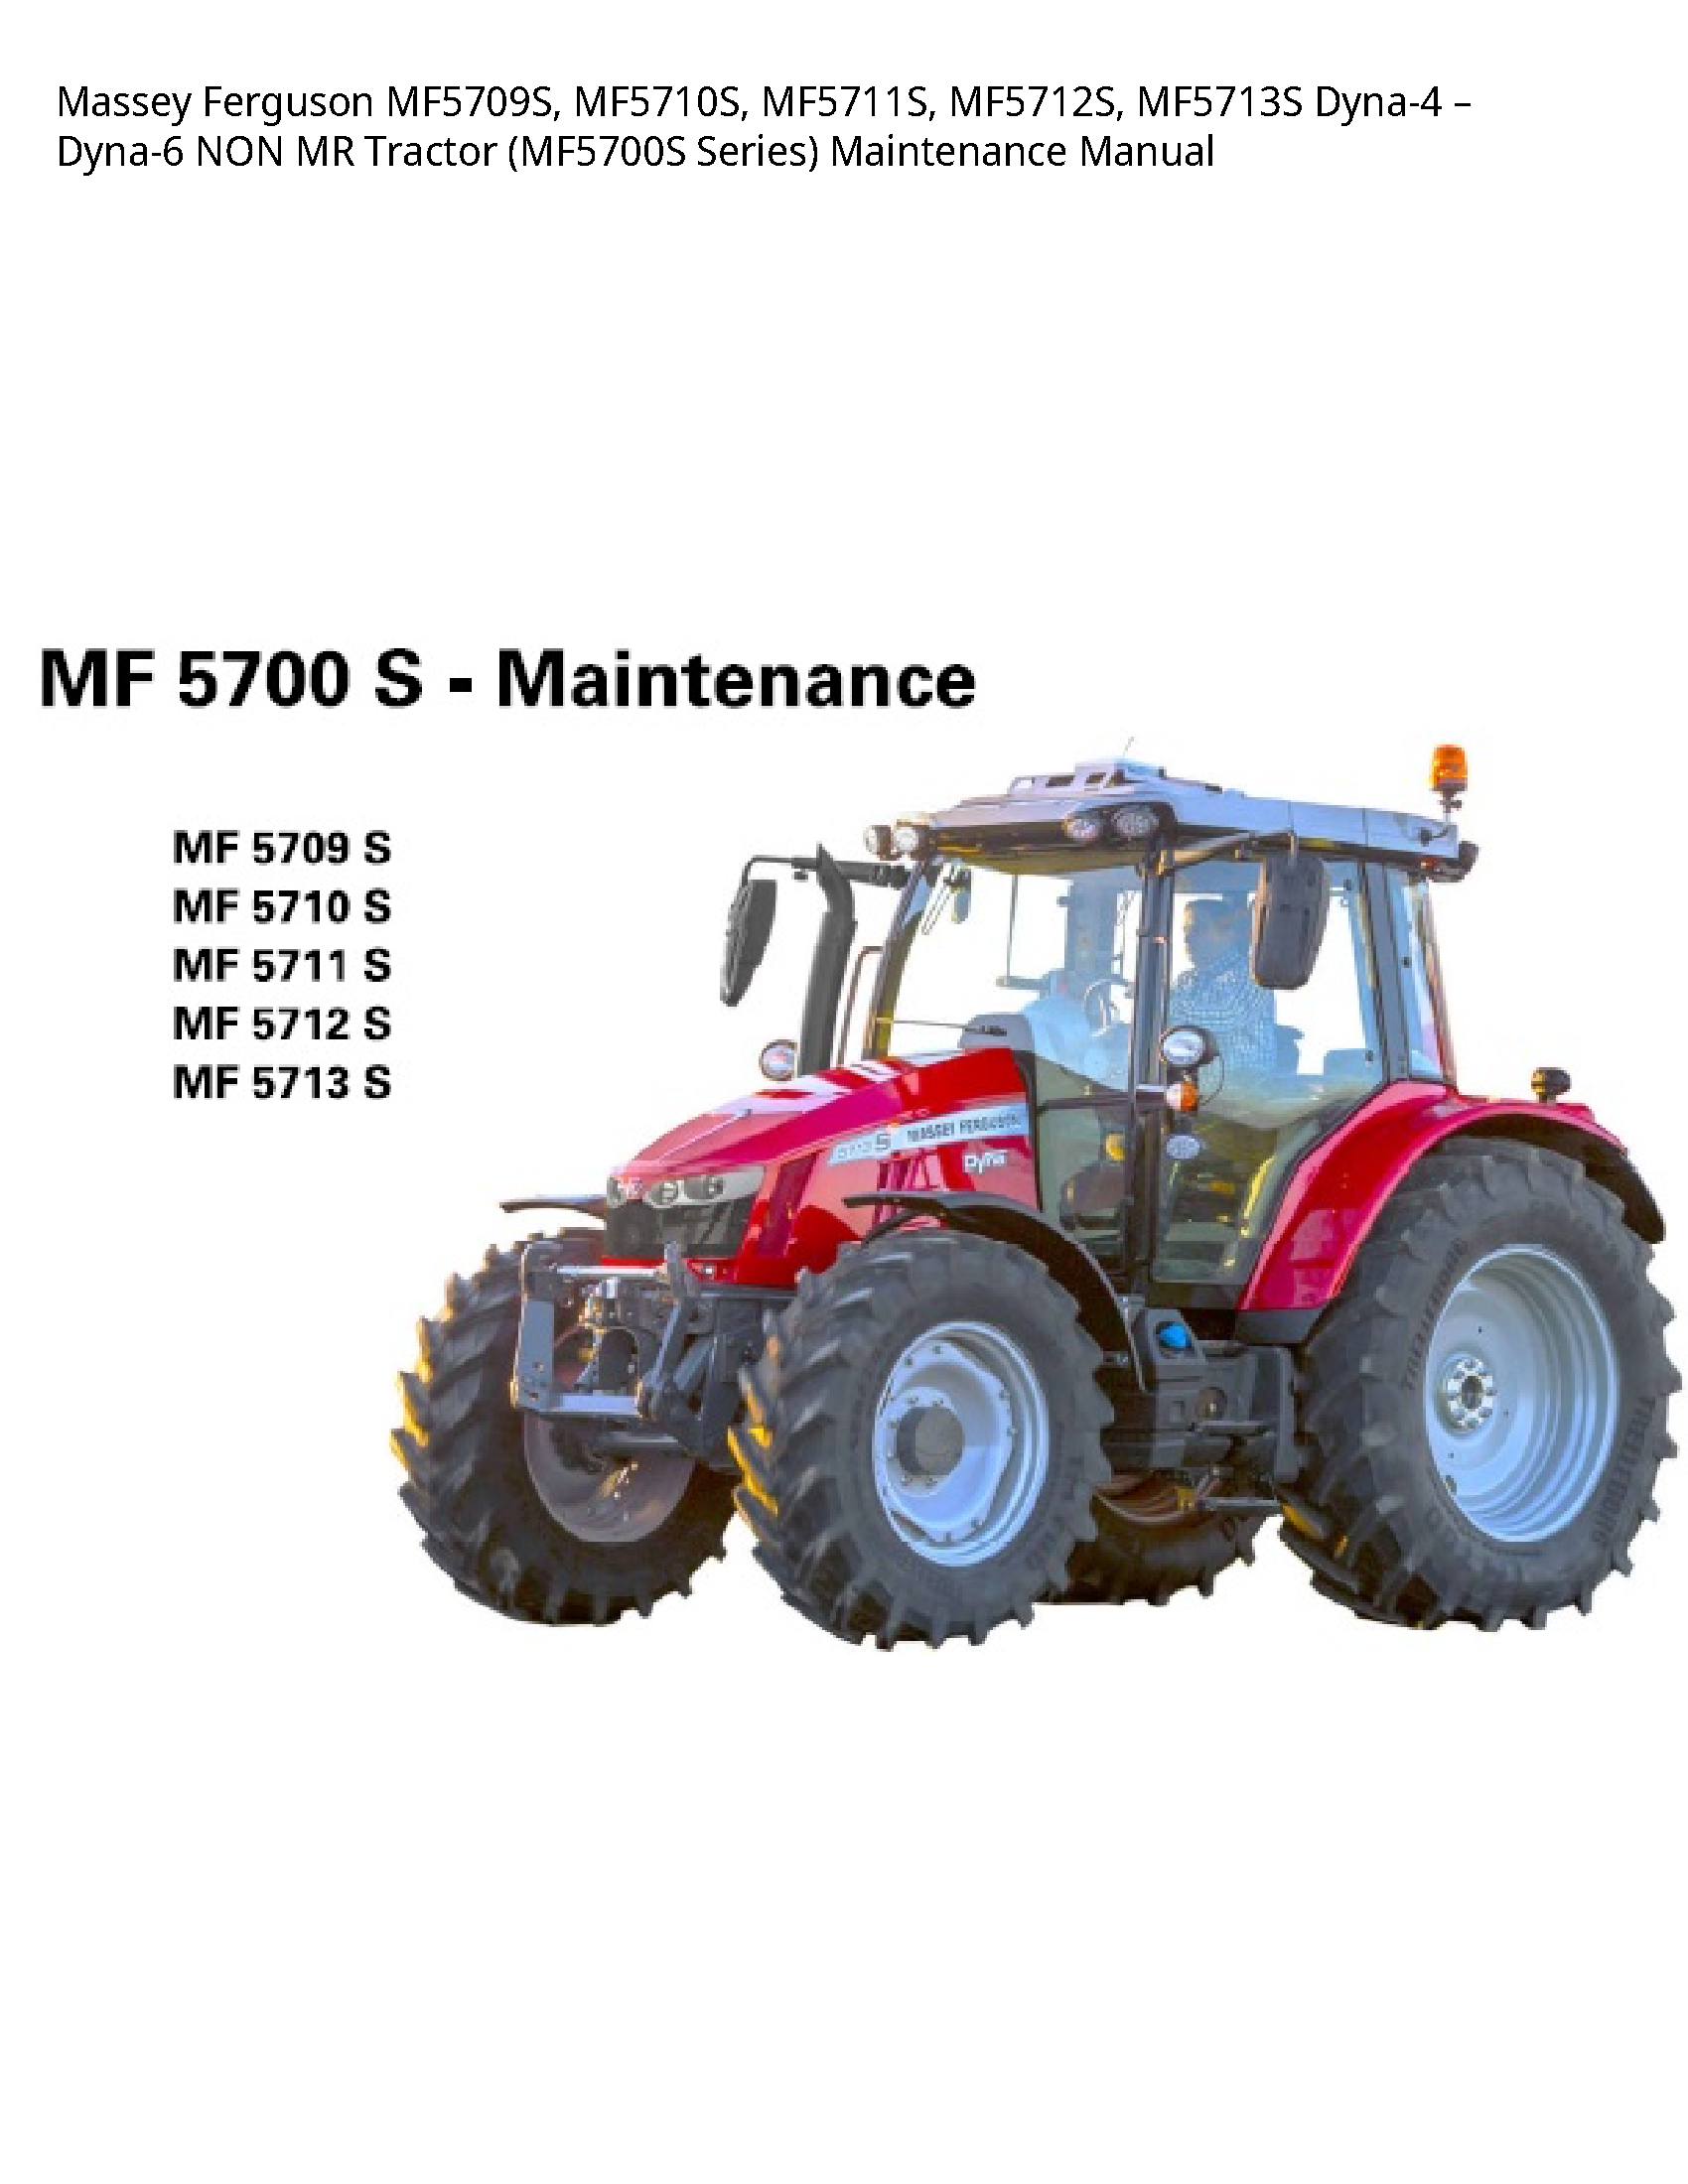 Massey Ferguson MF5709S NON MR Tractor Series) Maintenance manual